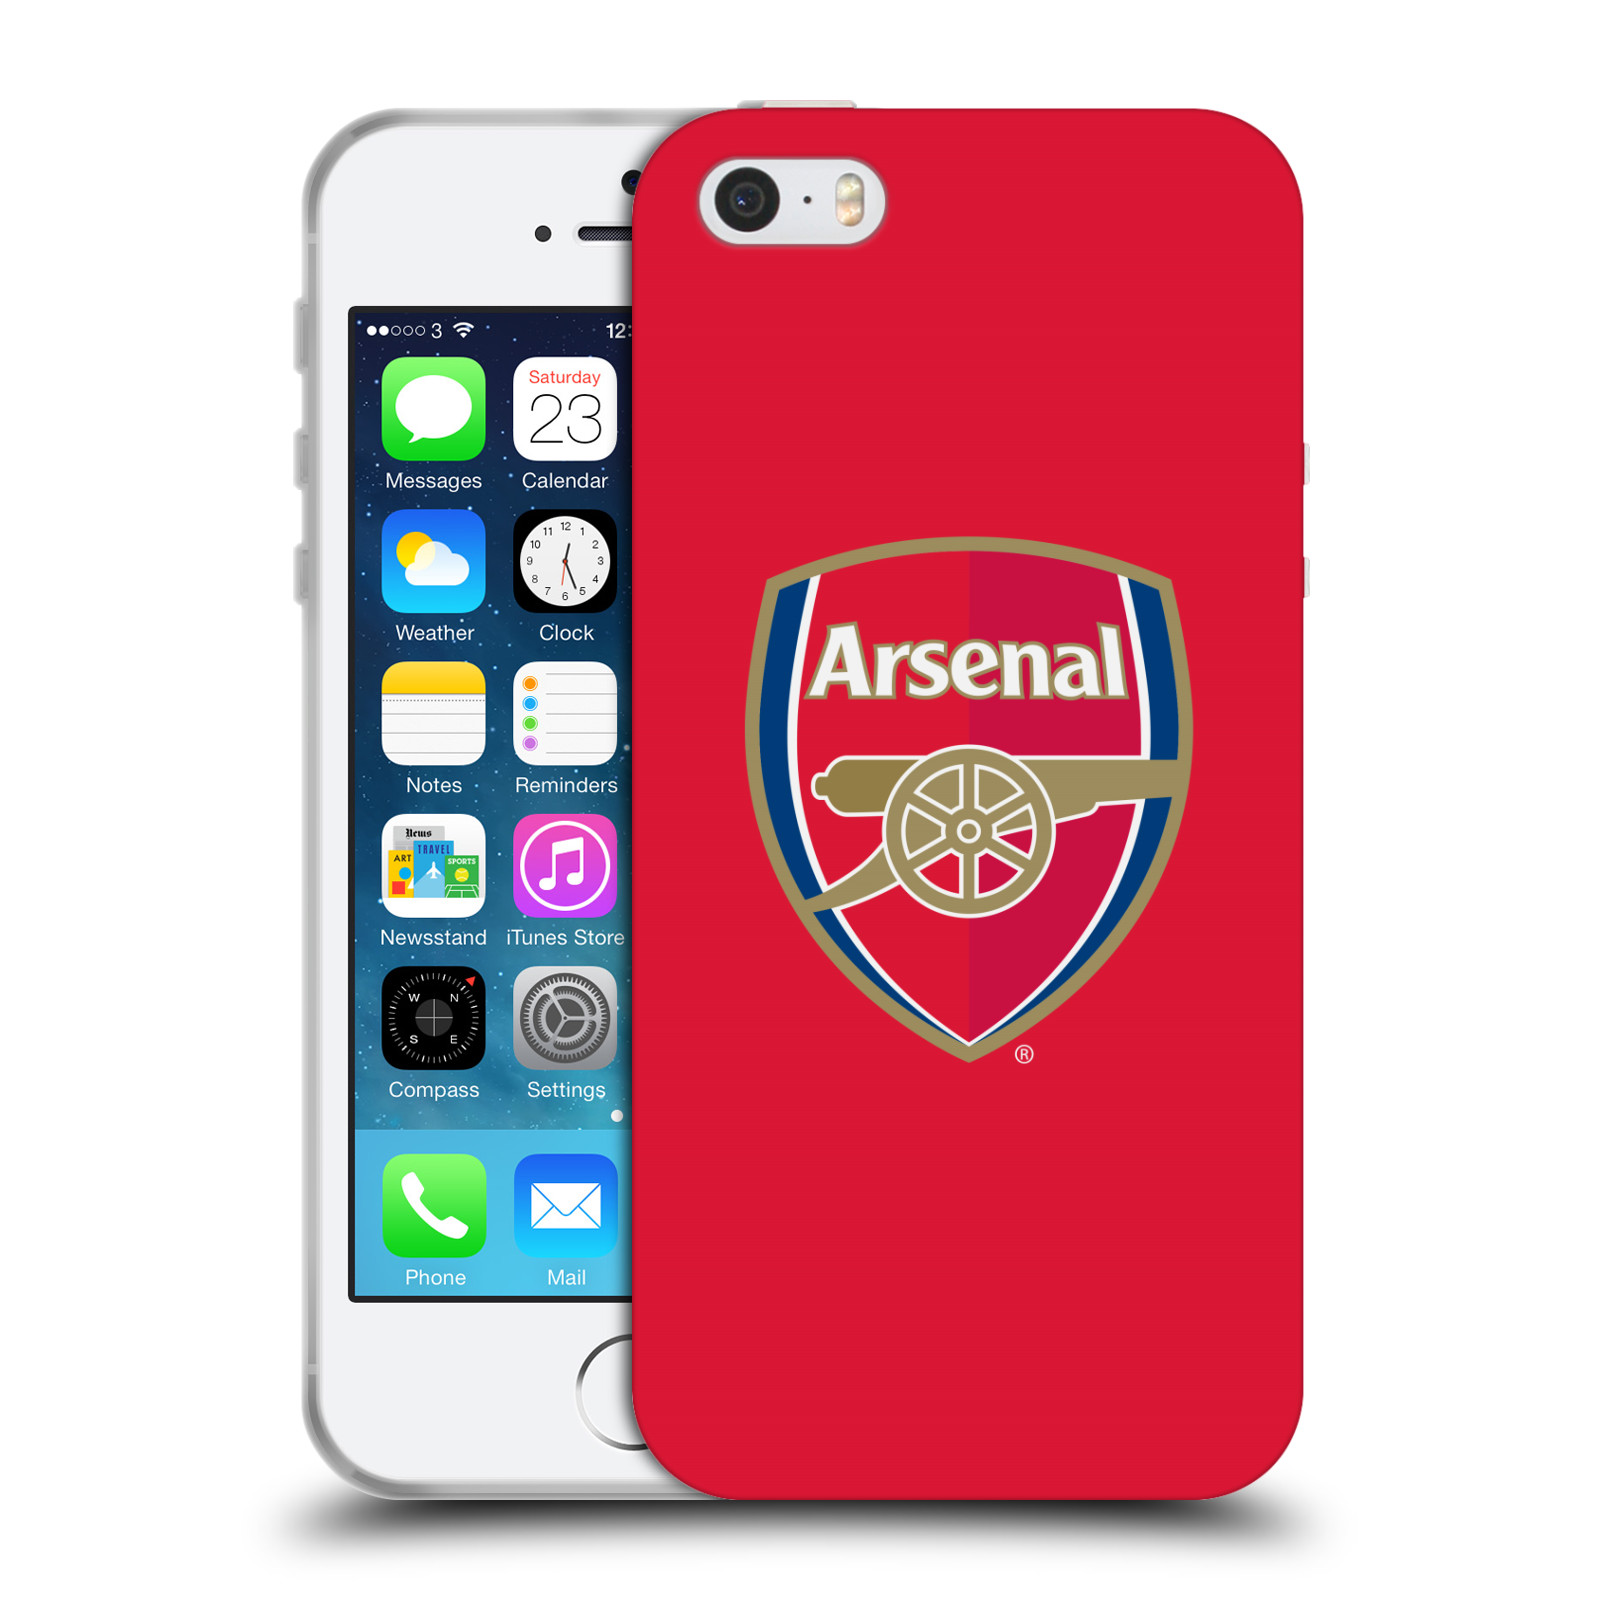 HEAD CASE silikonový obal na mobil Apple Iphone 5/5S Fotbalový klub Arsenal znak barevný červené pozadí